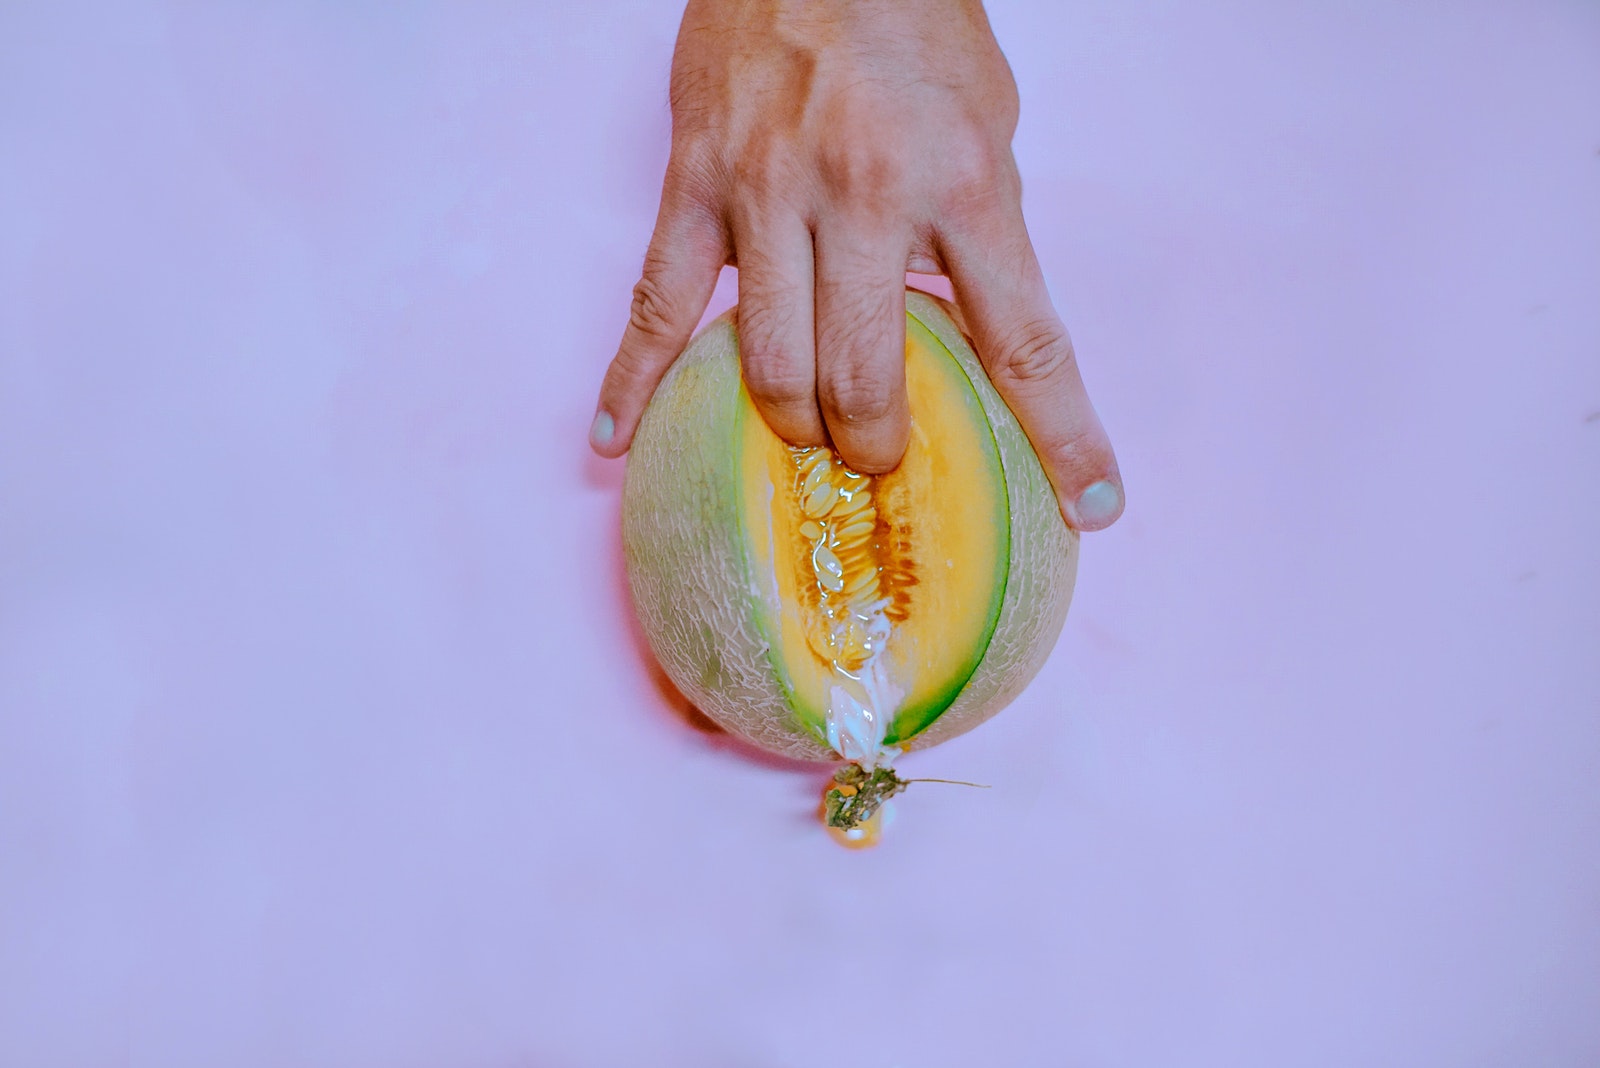 Fingers on Melon